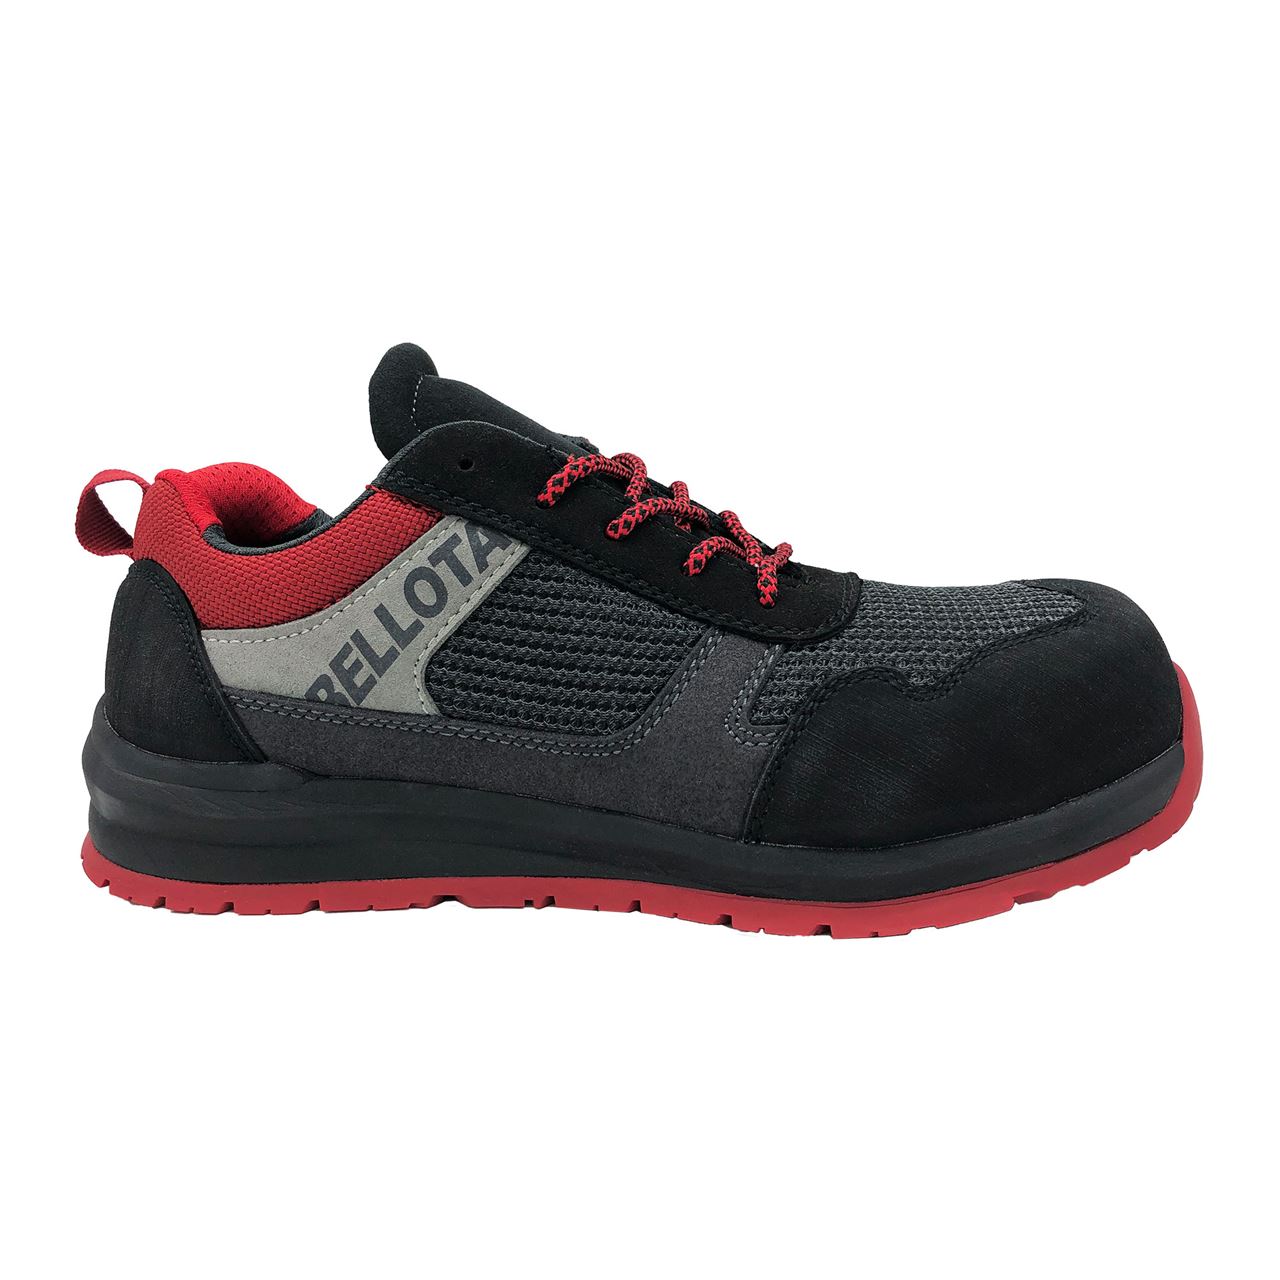 Zapato Bellota Street negro-rojo 72350 - Suministros Urquiza